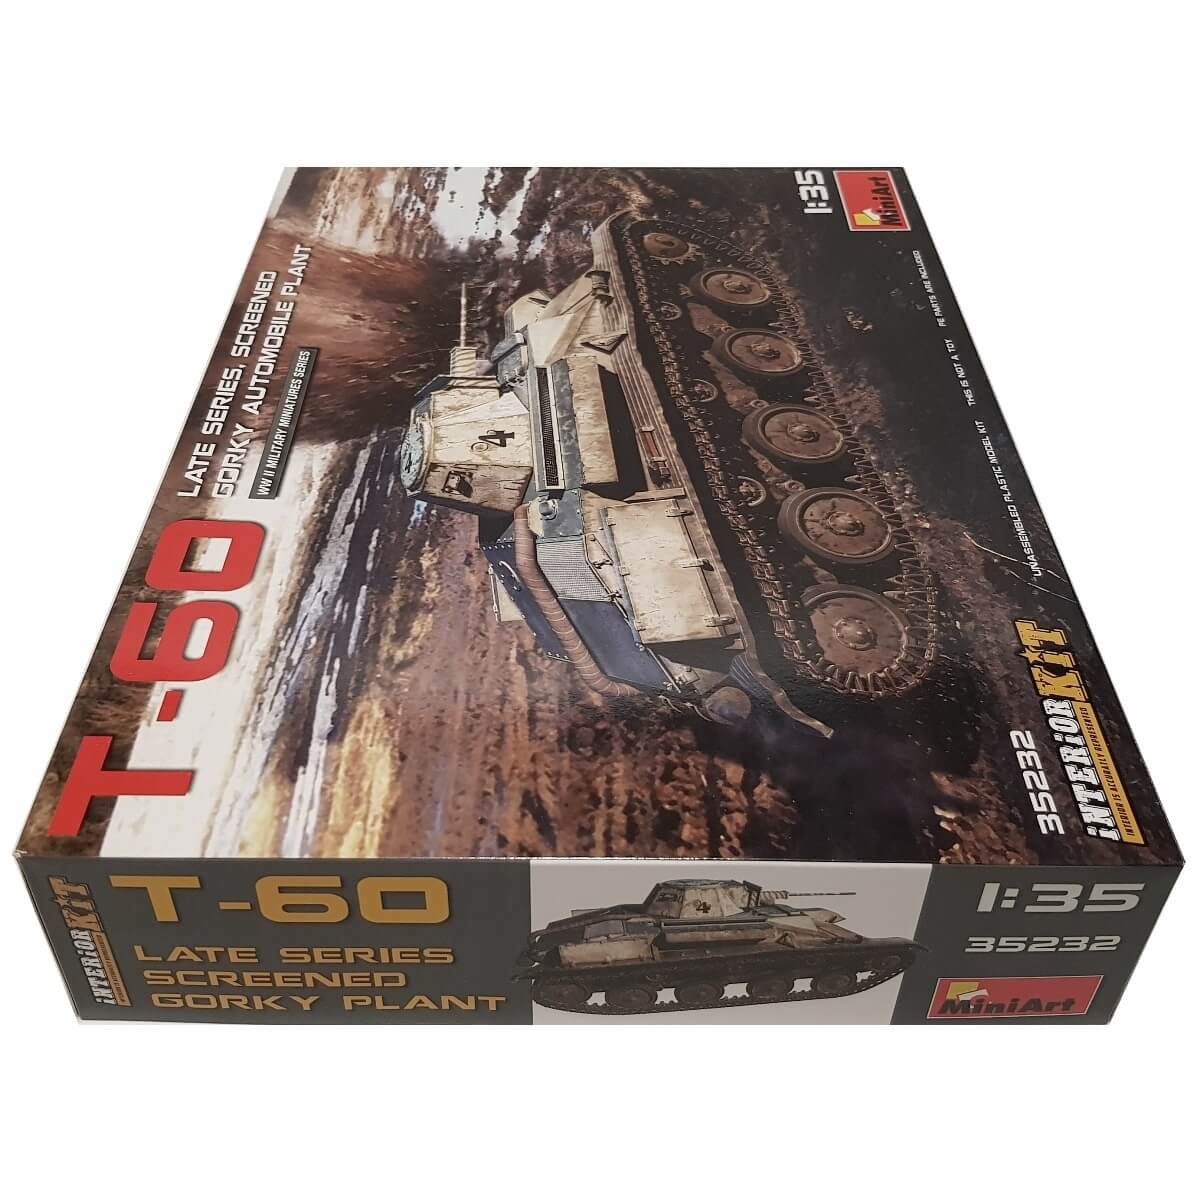 1:35 Soviet Light Tank T-60 Late Series Screened - Gorky Automobile Plant - MINIART